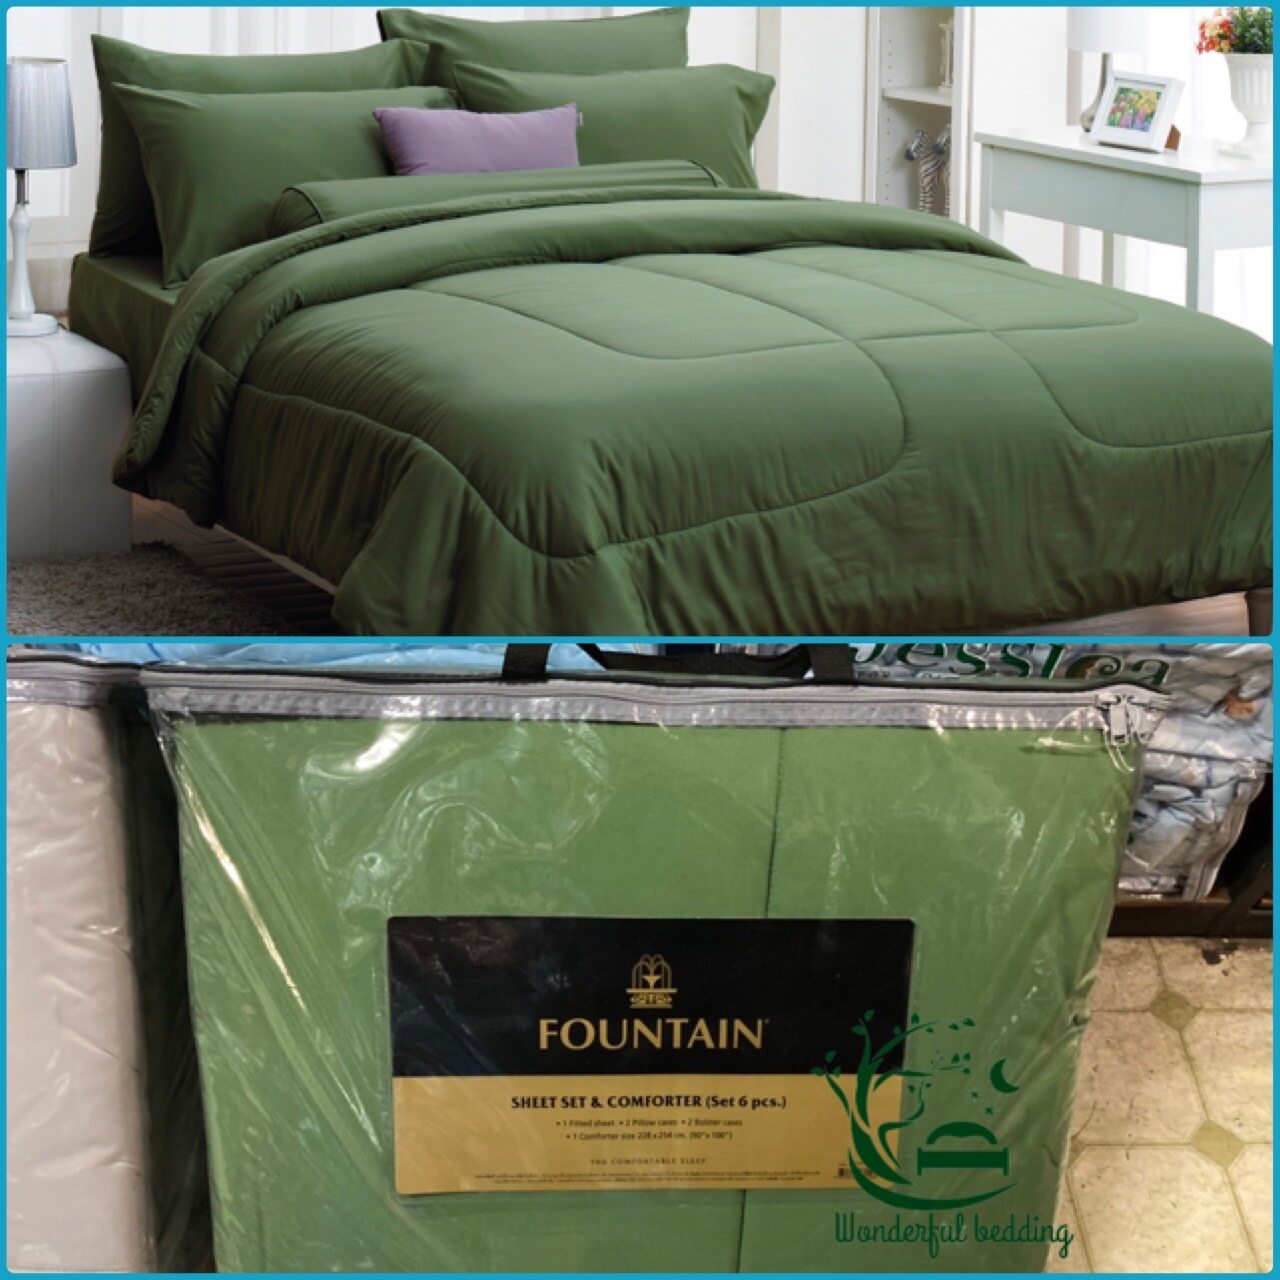 FOUNTAIN ชุดผ้าปู (ไม่มีผ้านวม) ผ้าปู ที่นอน แท้ 100% FTC สีพื้น เขียว Green Gray เทา ขนาด 3.5 5 6ฟุต ชุดเครื่องนอน ผ้านวม ผ้าปูที่นอน wonderful bedding  variation3 Greenขนาดสินค้า 6 ฟุต